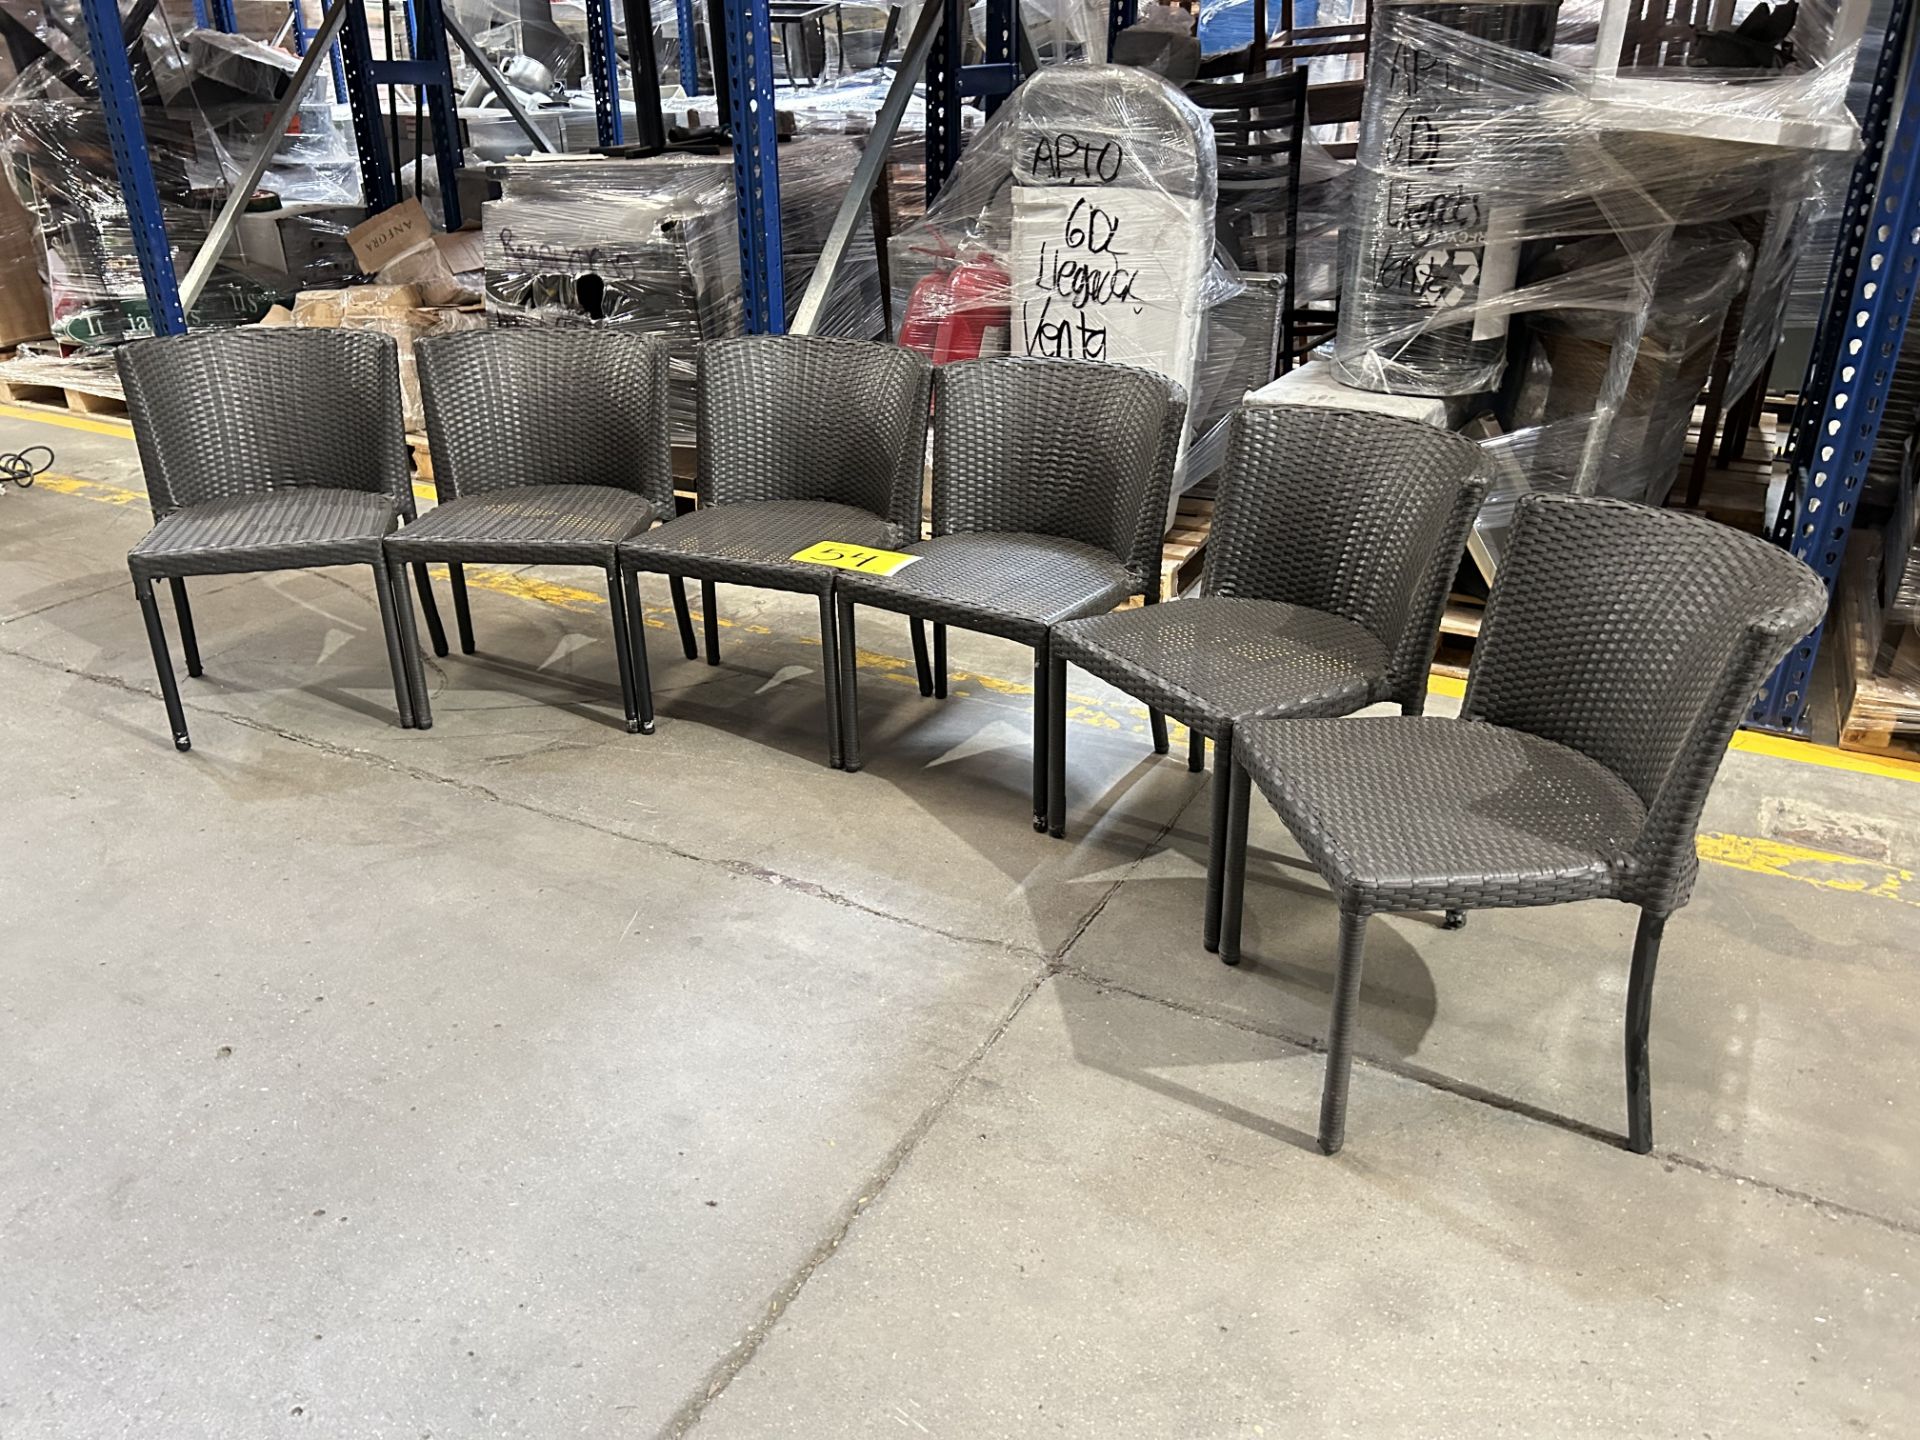 6 sillas de ratán respaldo curvo para exterior Color Café Medidas 55 cm x 62 cm x 74 cm (Equipo Usa - Image 2 of 5